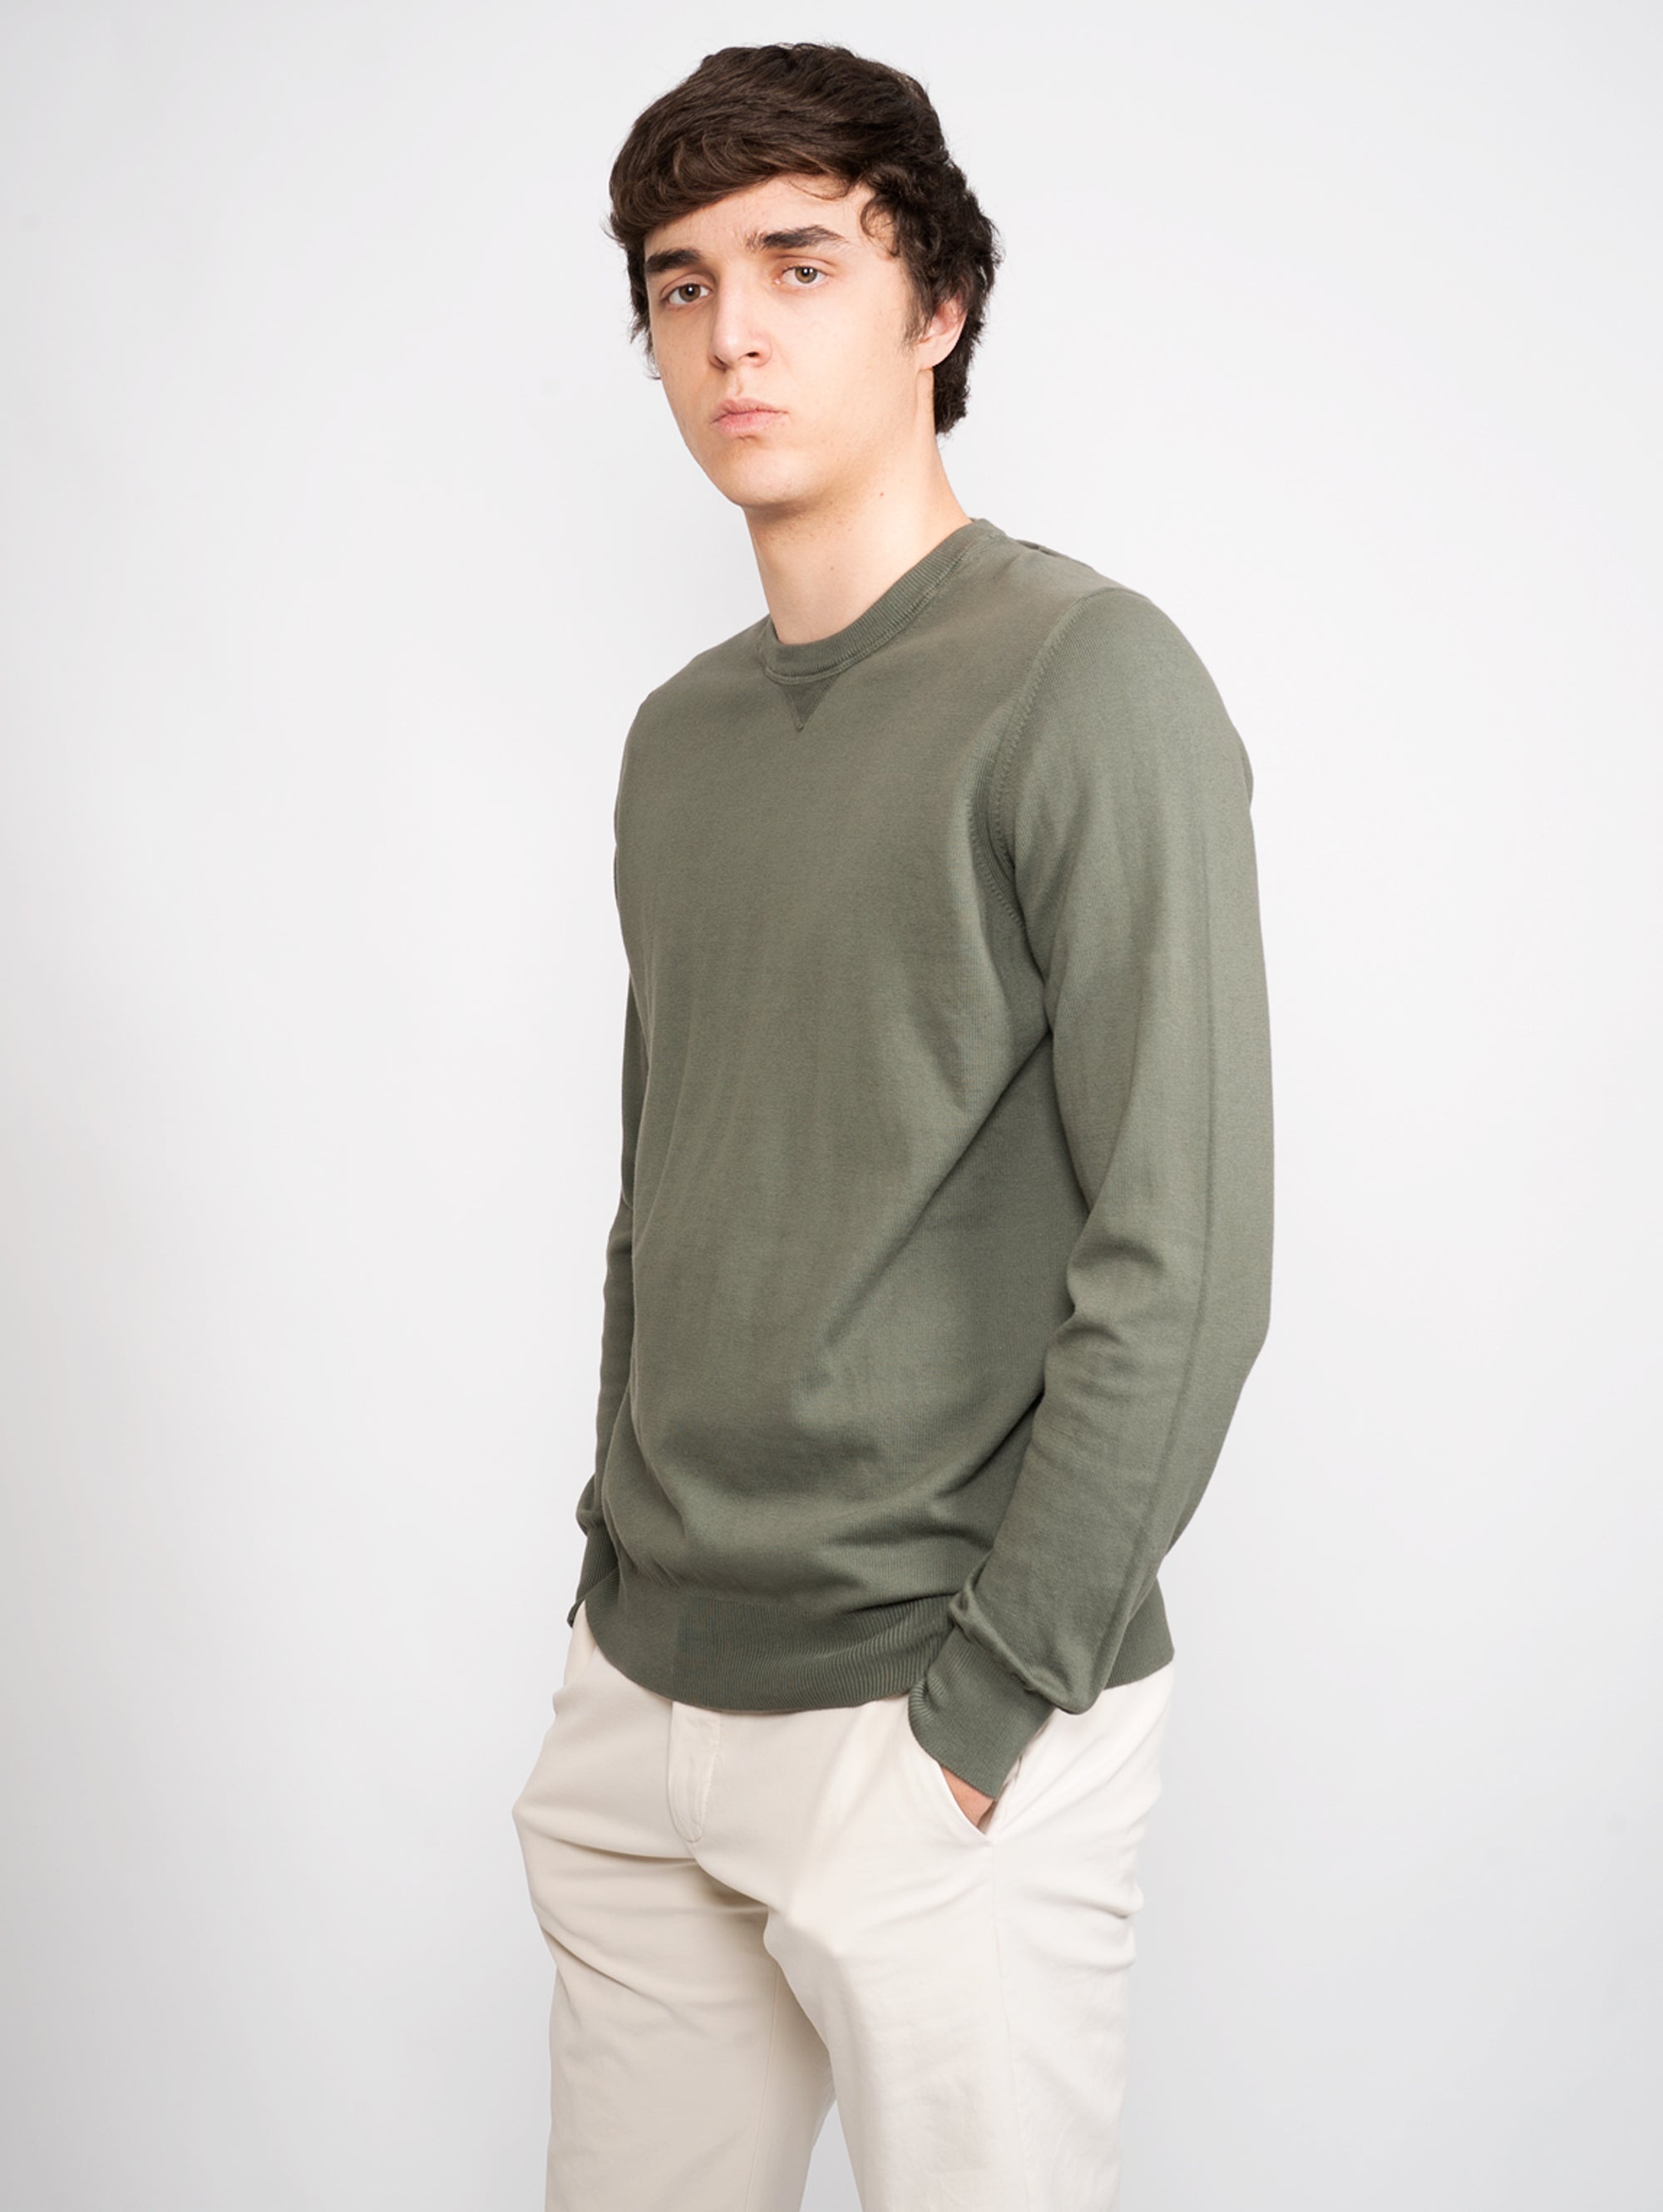 Sweater with Green Sweatshirt Collar